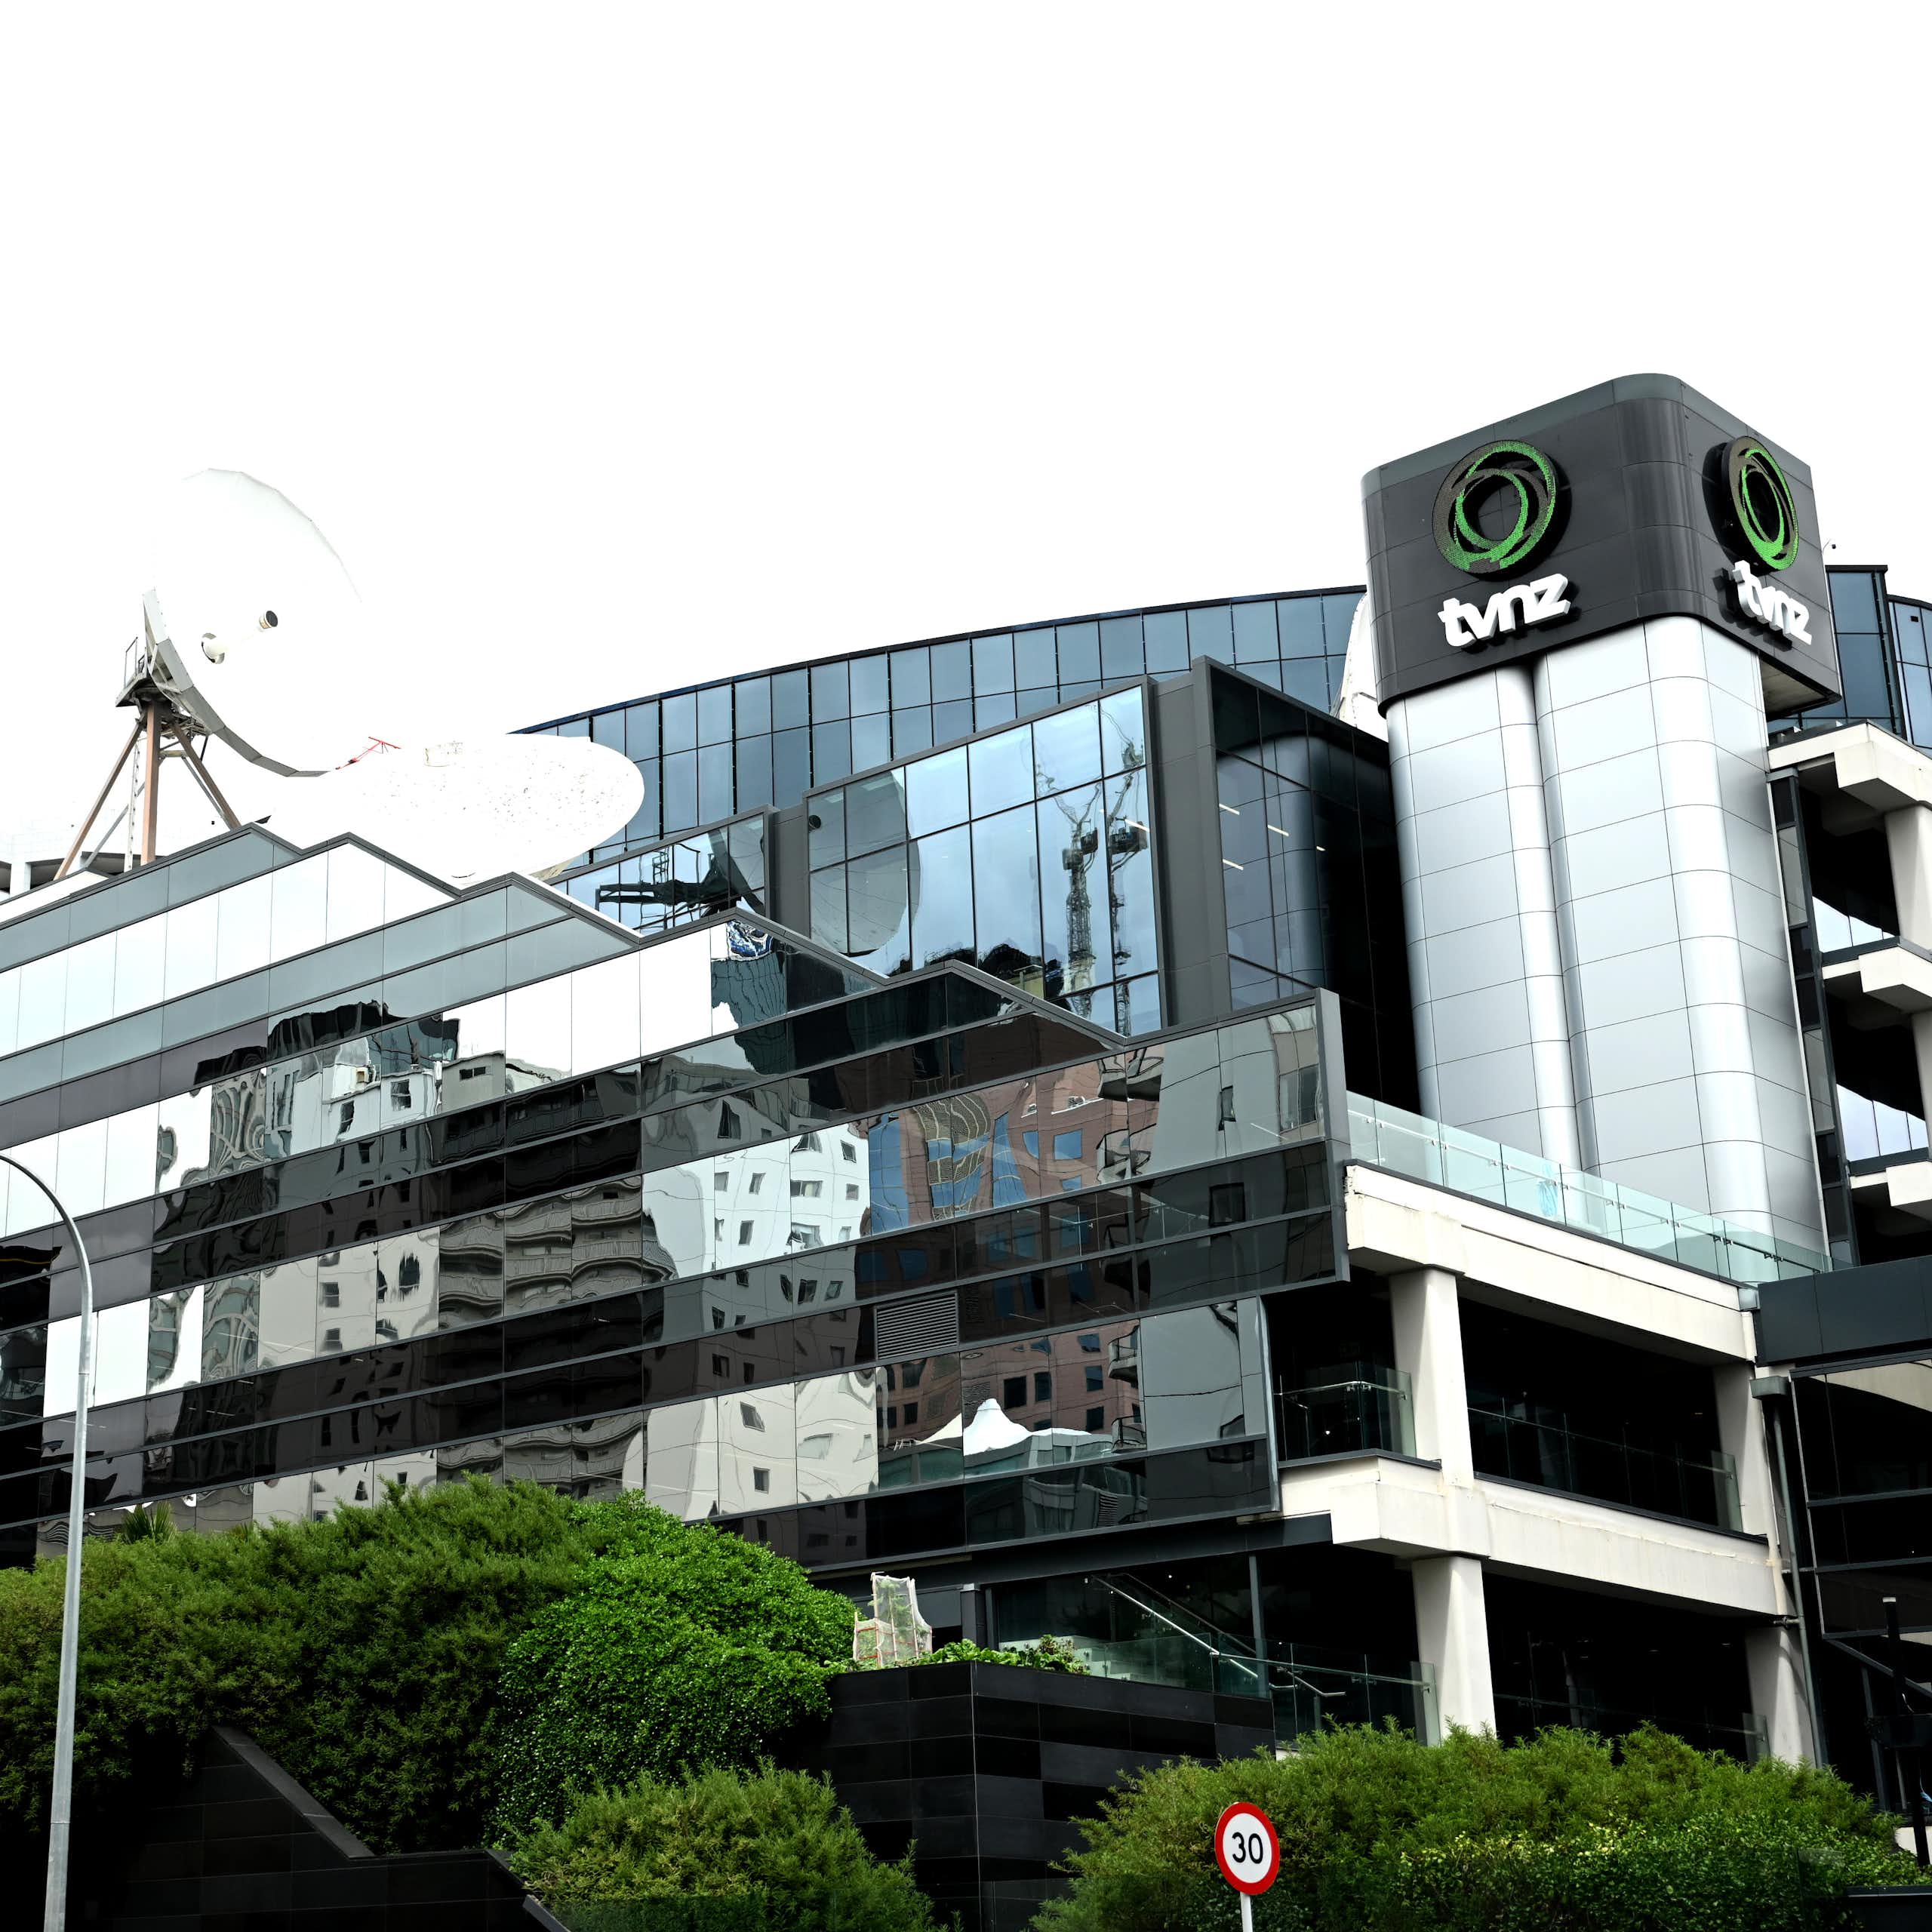 Exterior of TVNZ building in Auckland